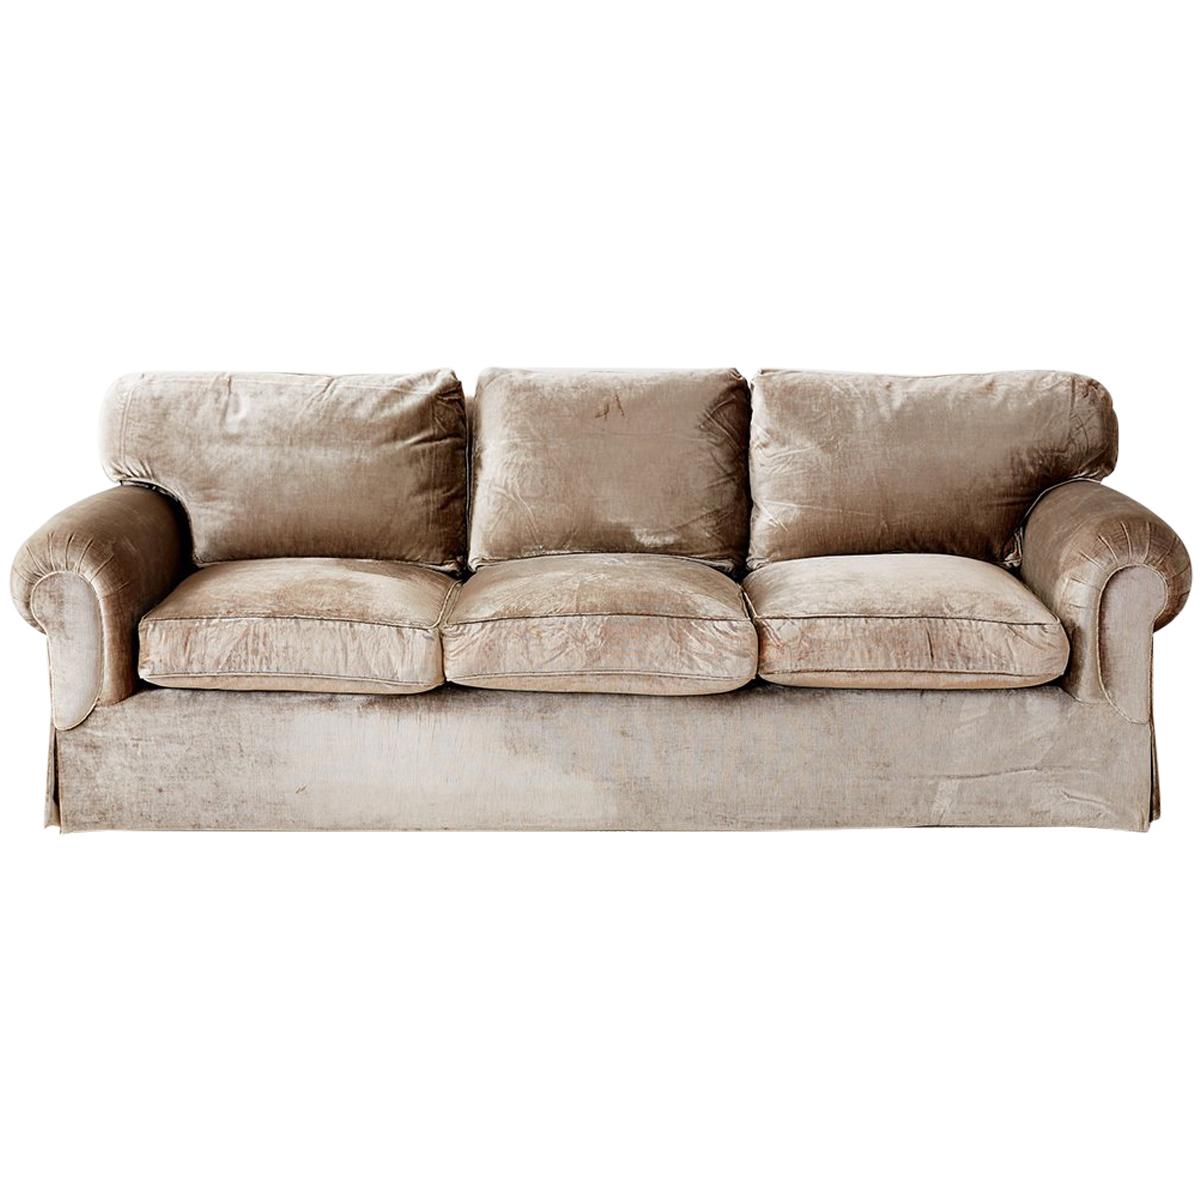 English Style Three-Seat Velvet Sofa